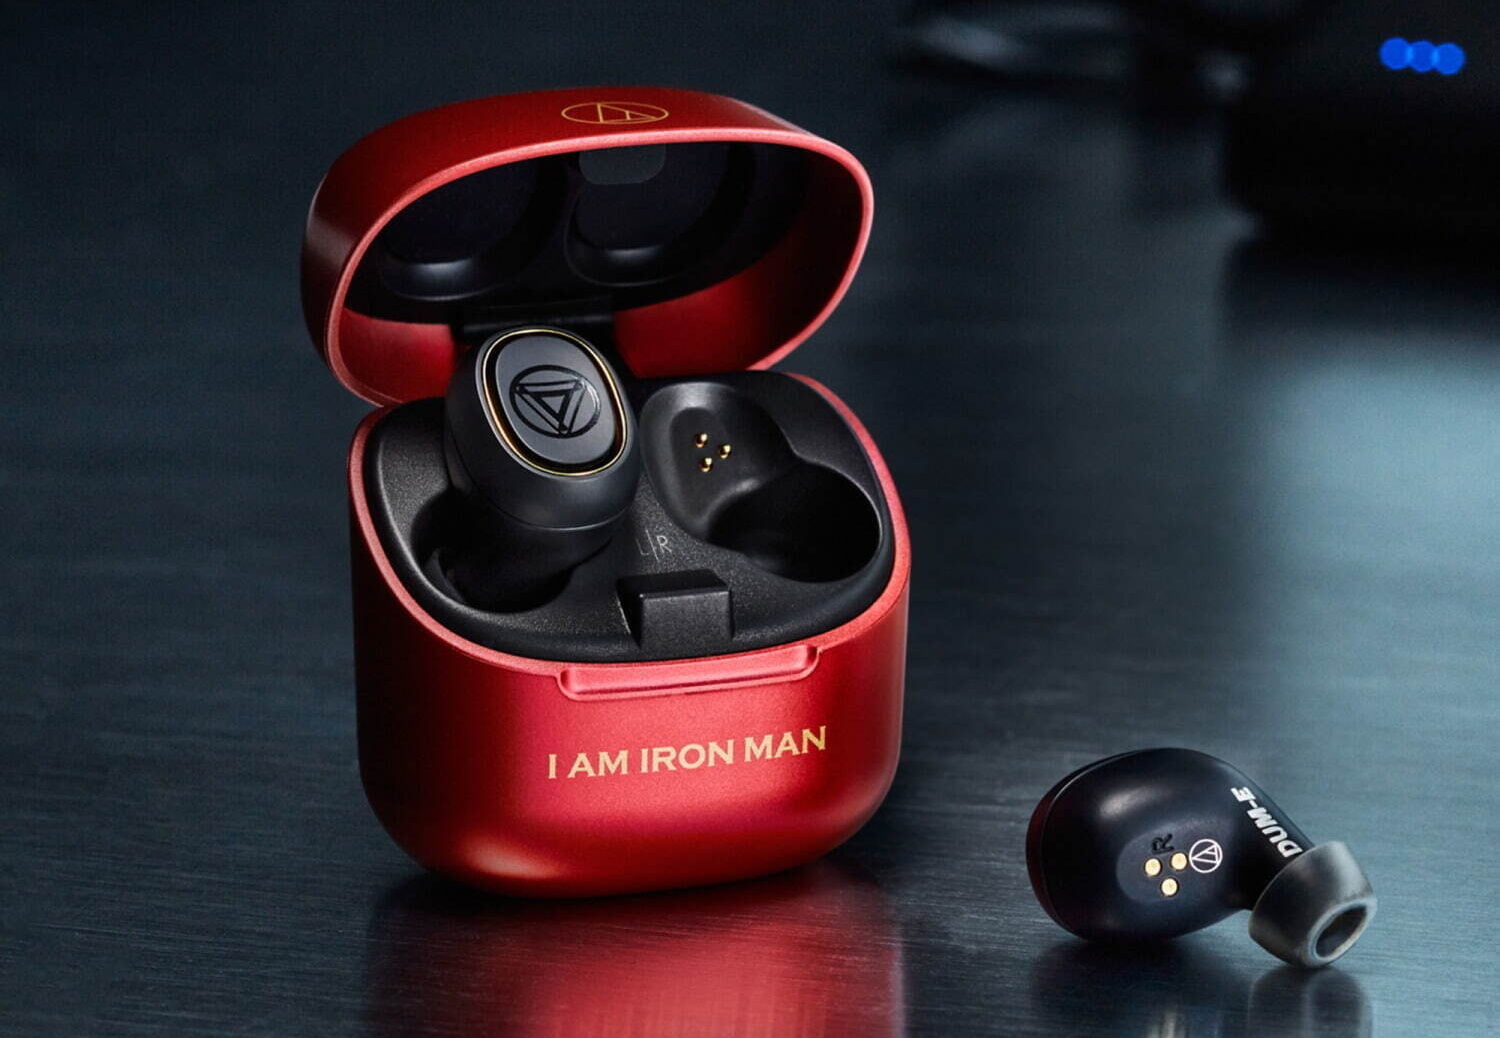 Audio-Technica x Marvel wireless earphone collection